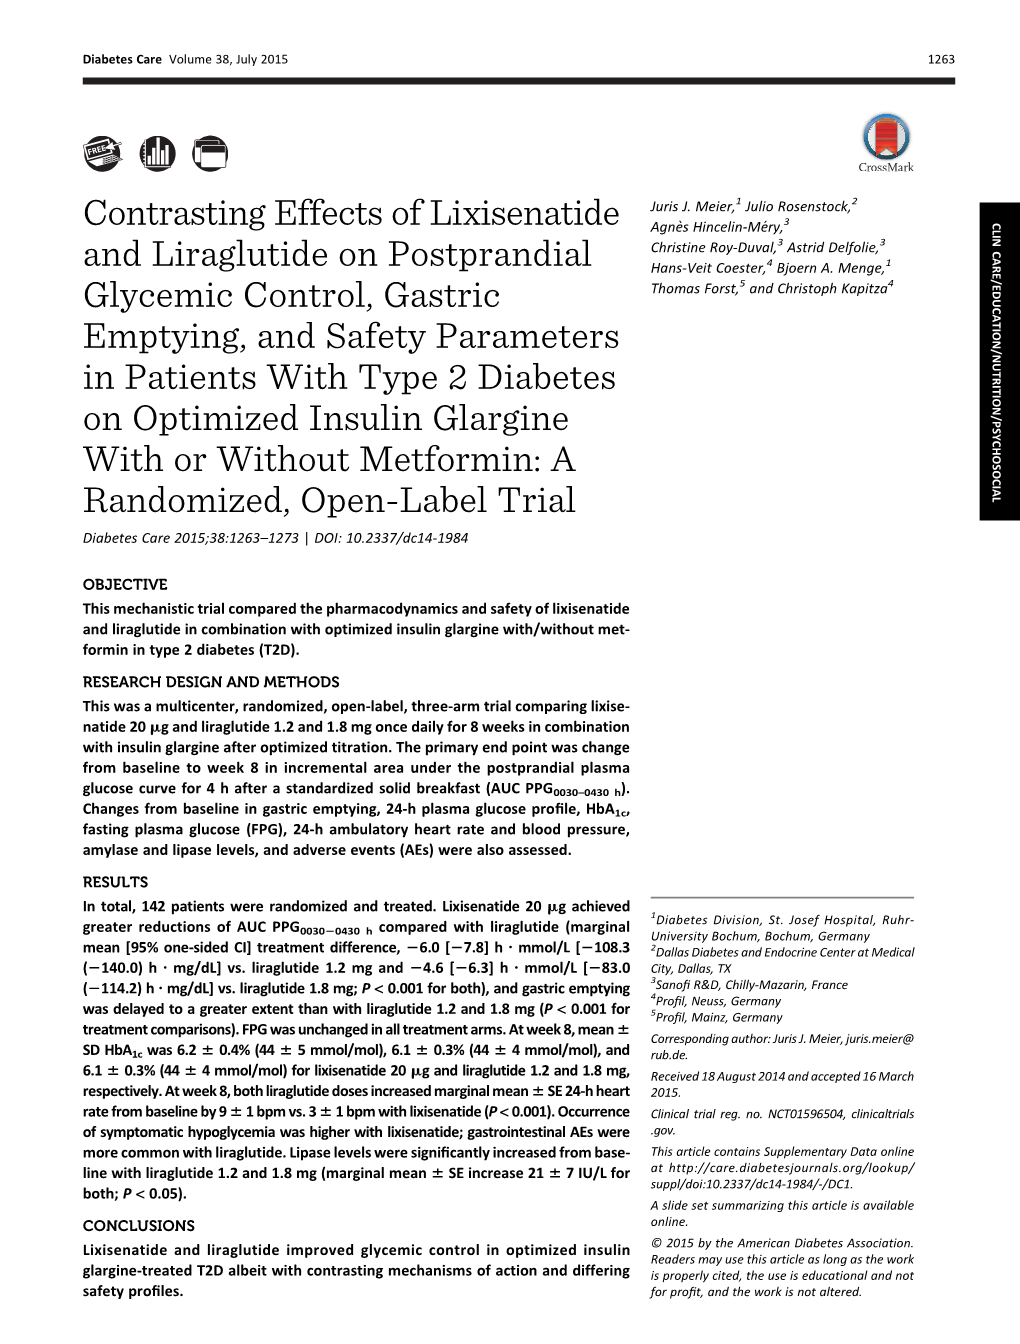 Contrasting Effects of Lixisenatide